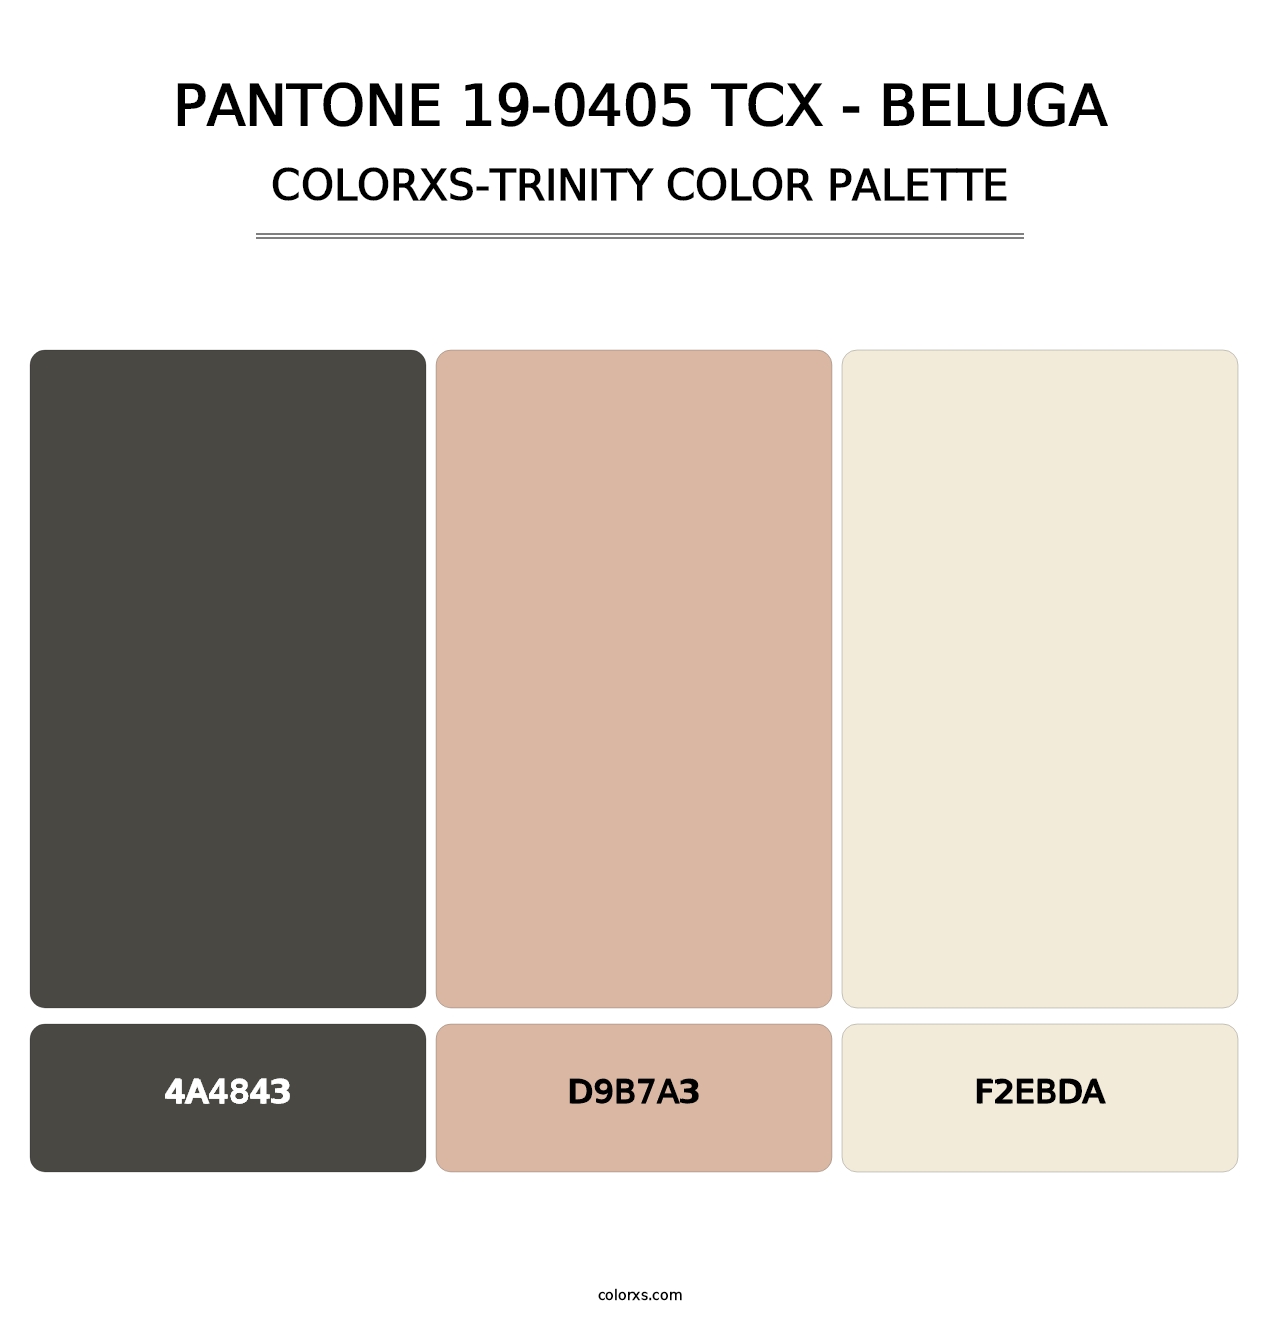 PANTONE 19-0405 TCX - Beluga - Colorxs Trinity Palette